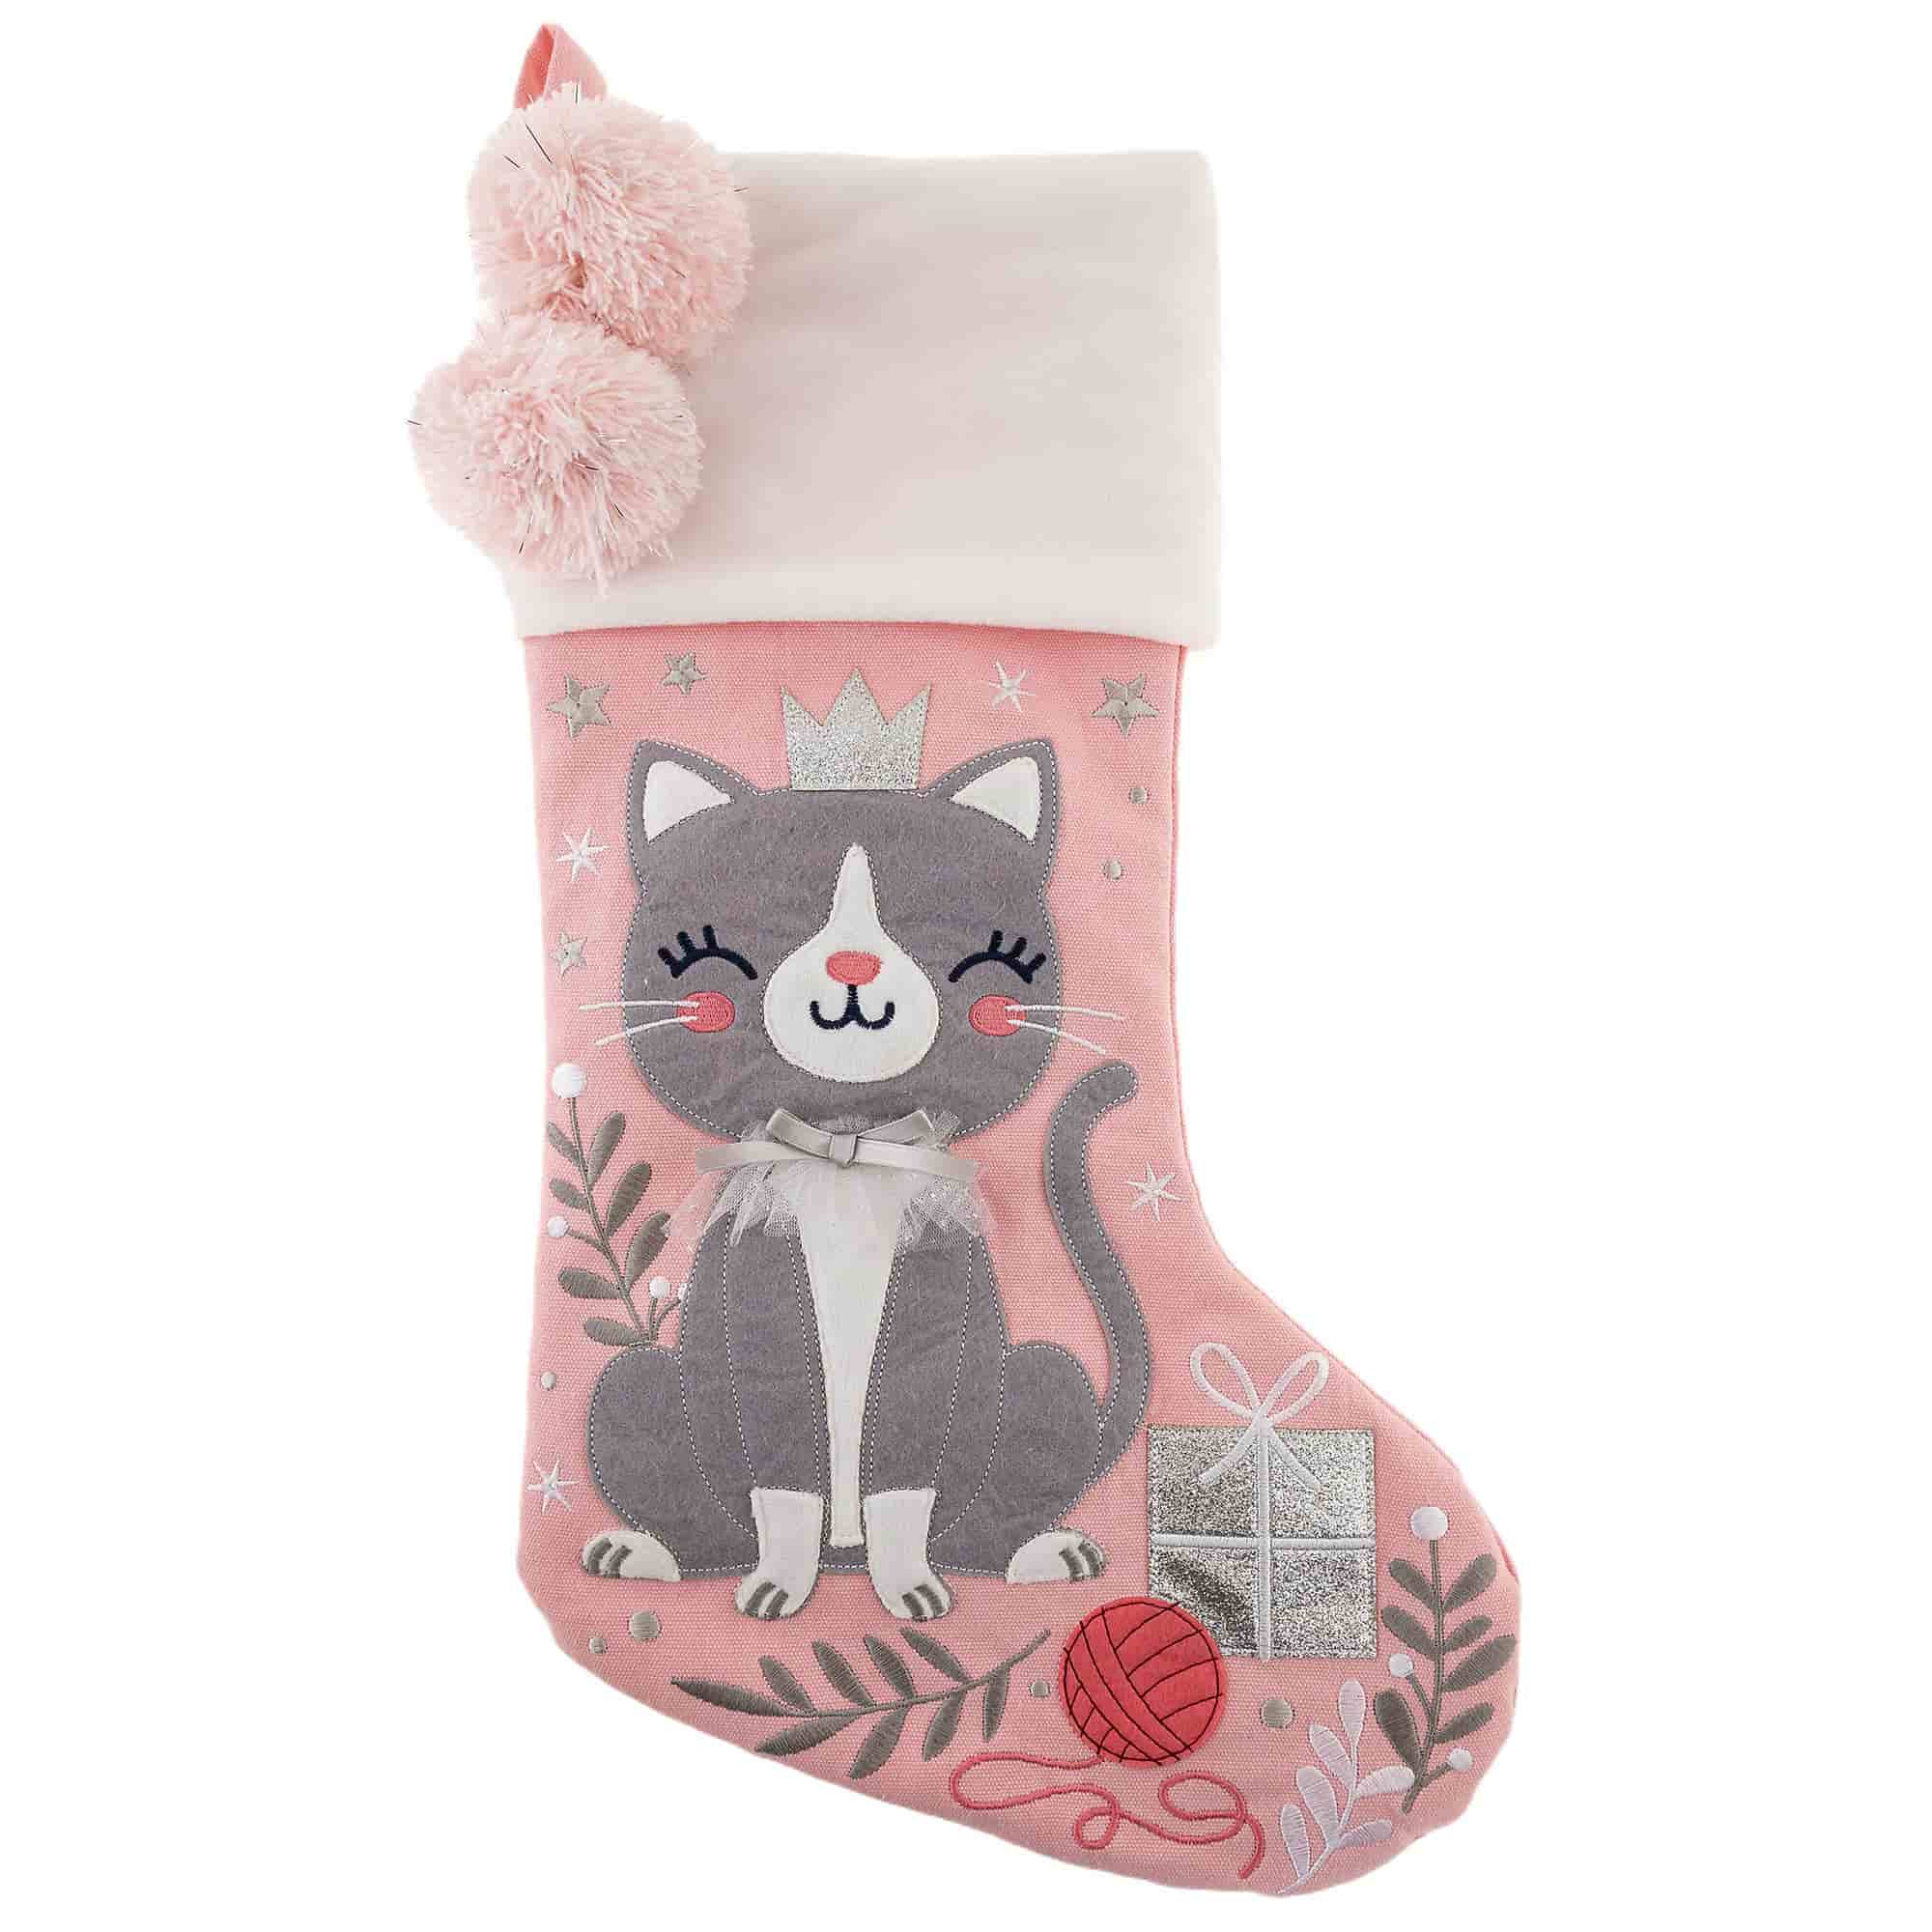 Stephen Joseph character cat needlepoint stockings - needlepoint christmas stockings 